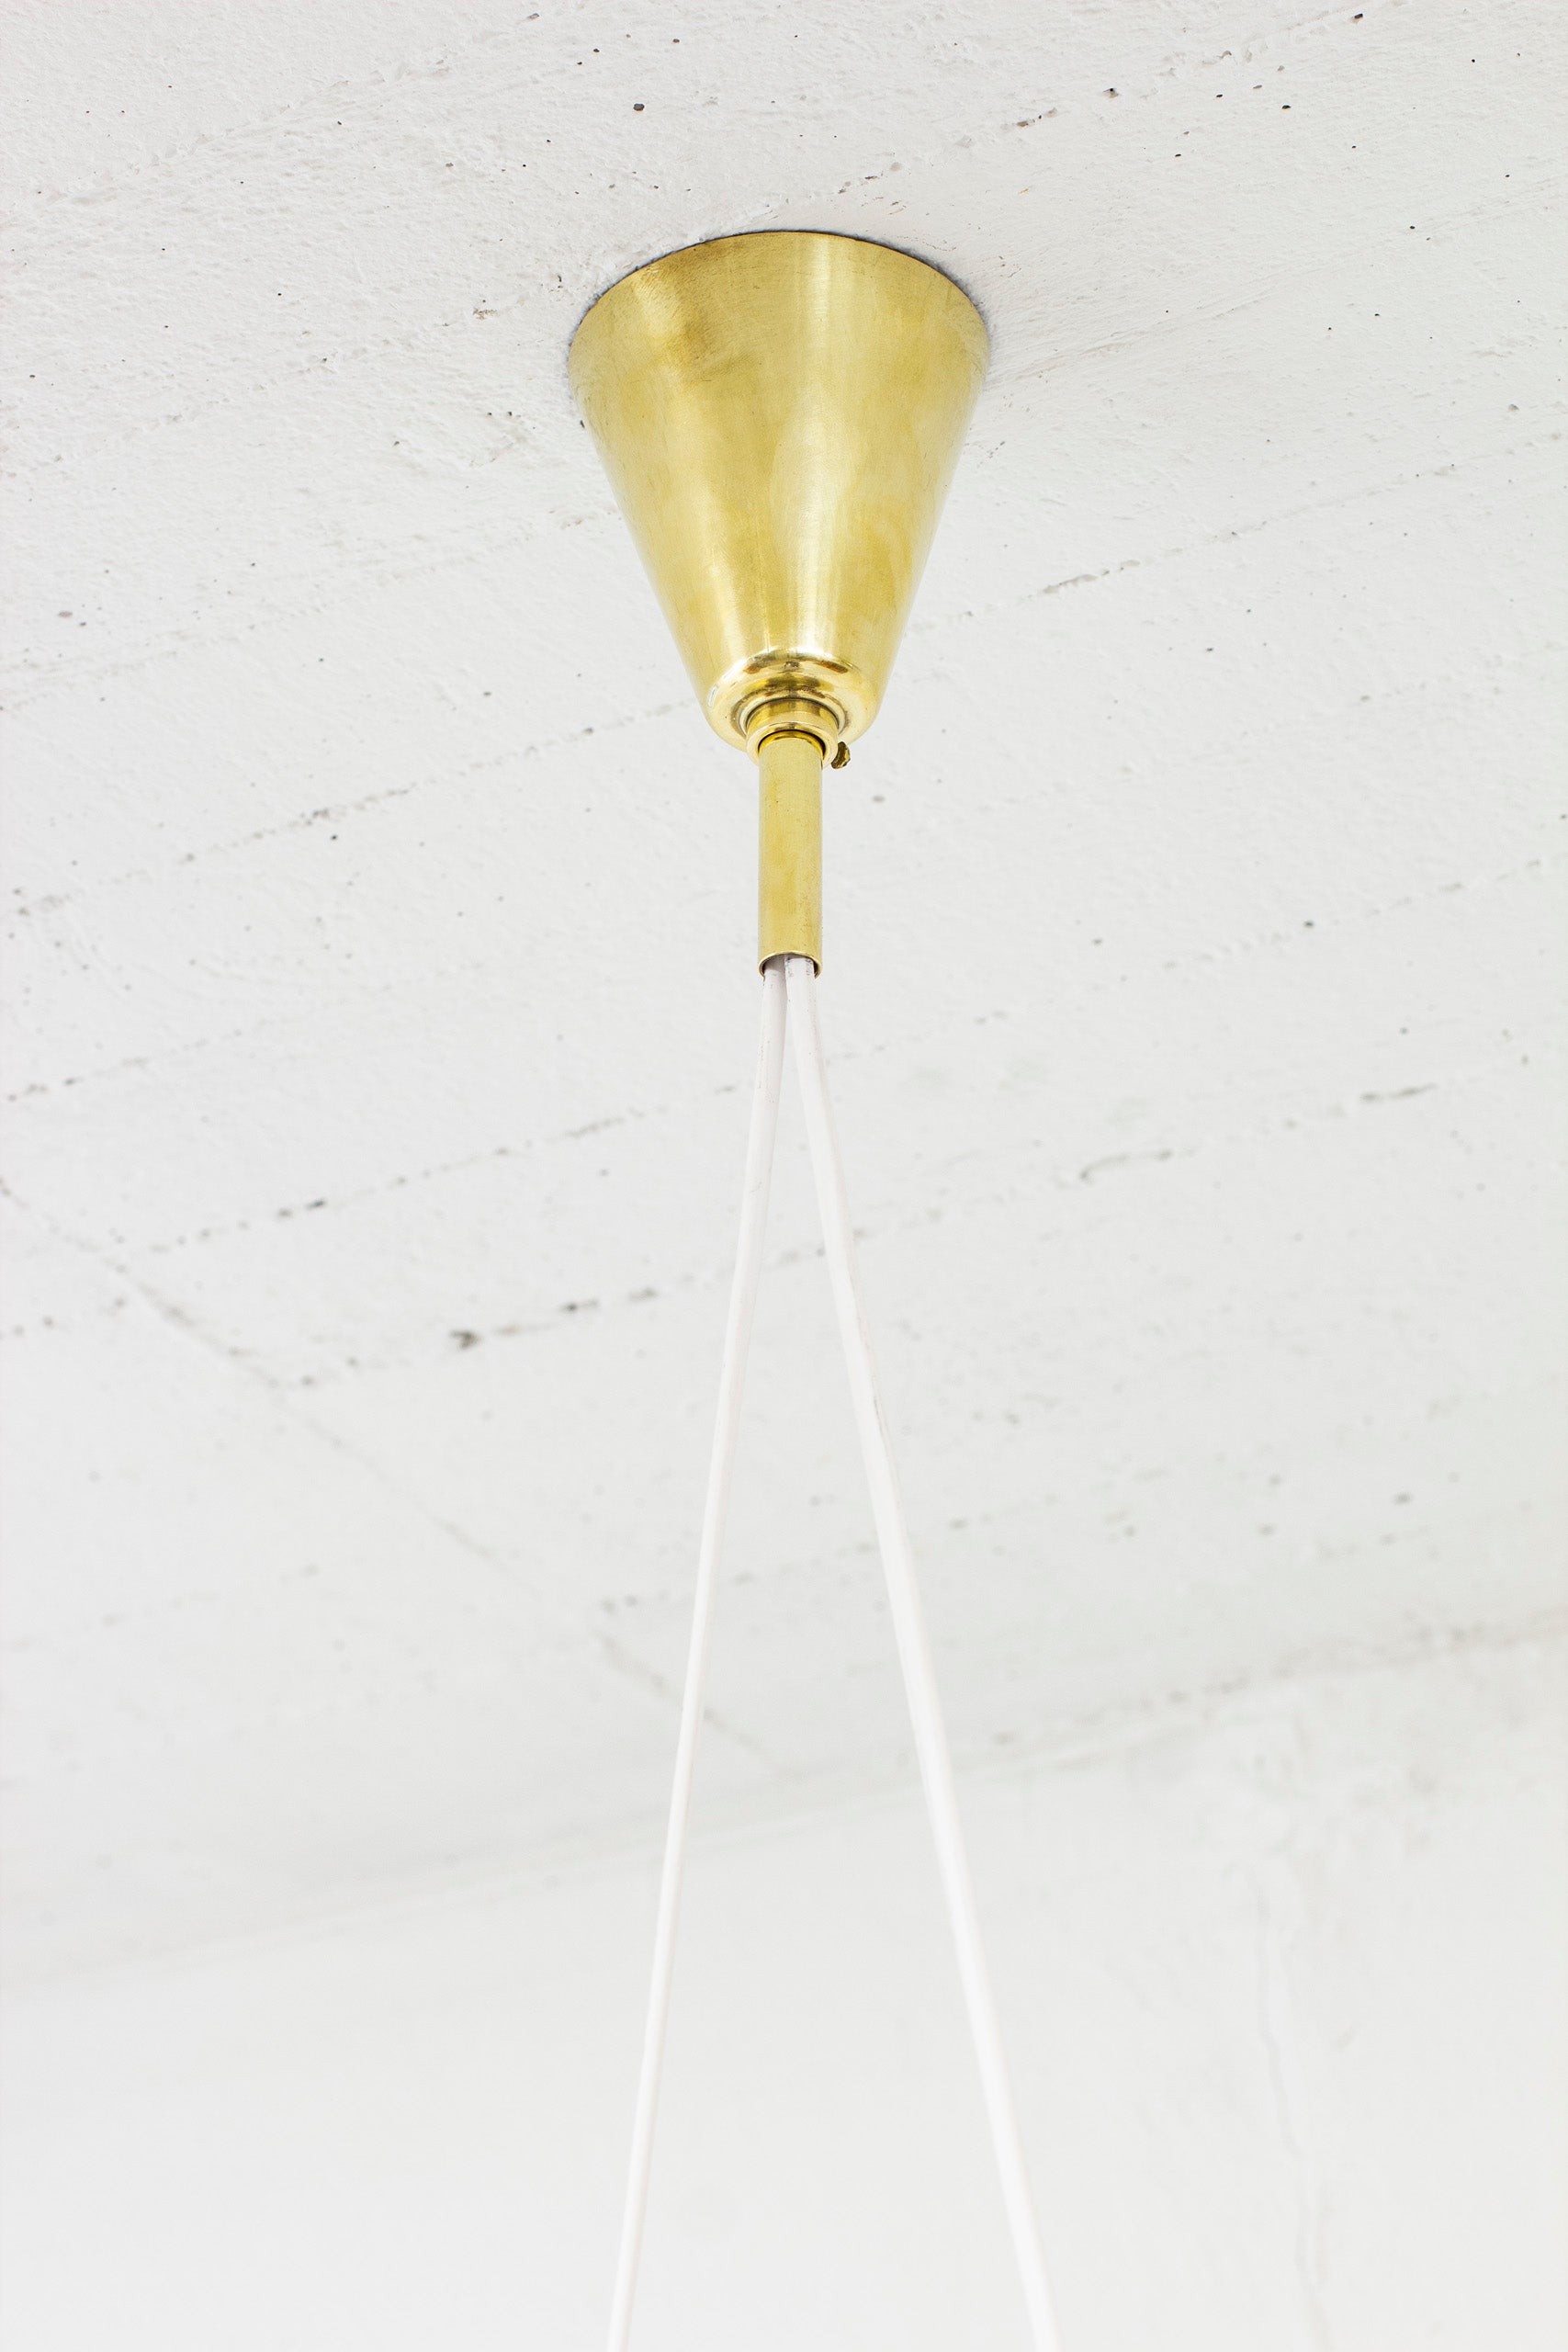 "Diabolo" ceiling lamp by Fog & Mørup